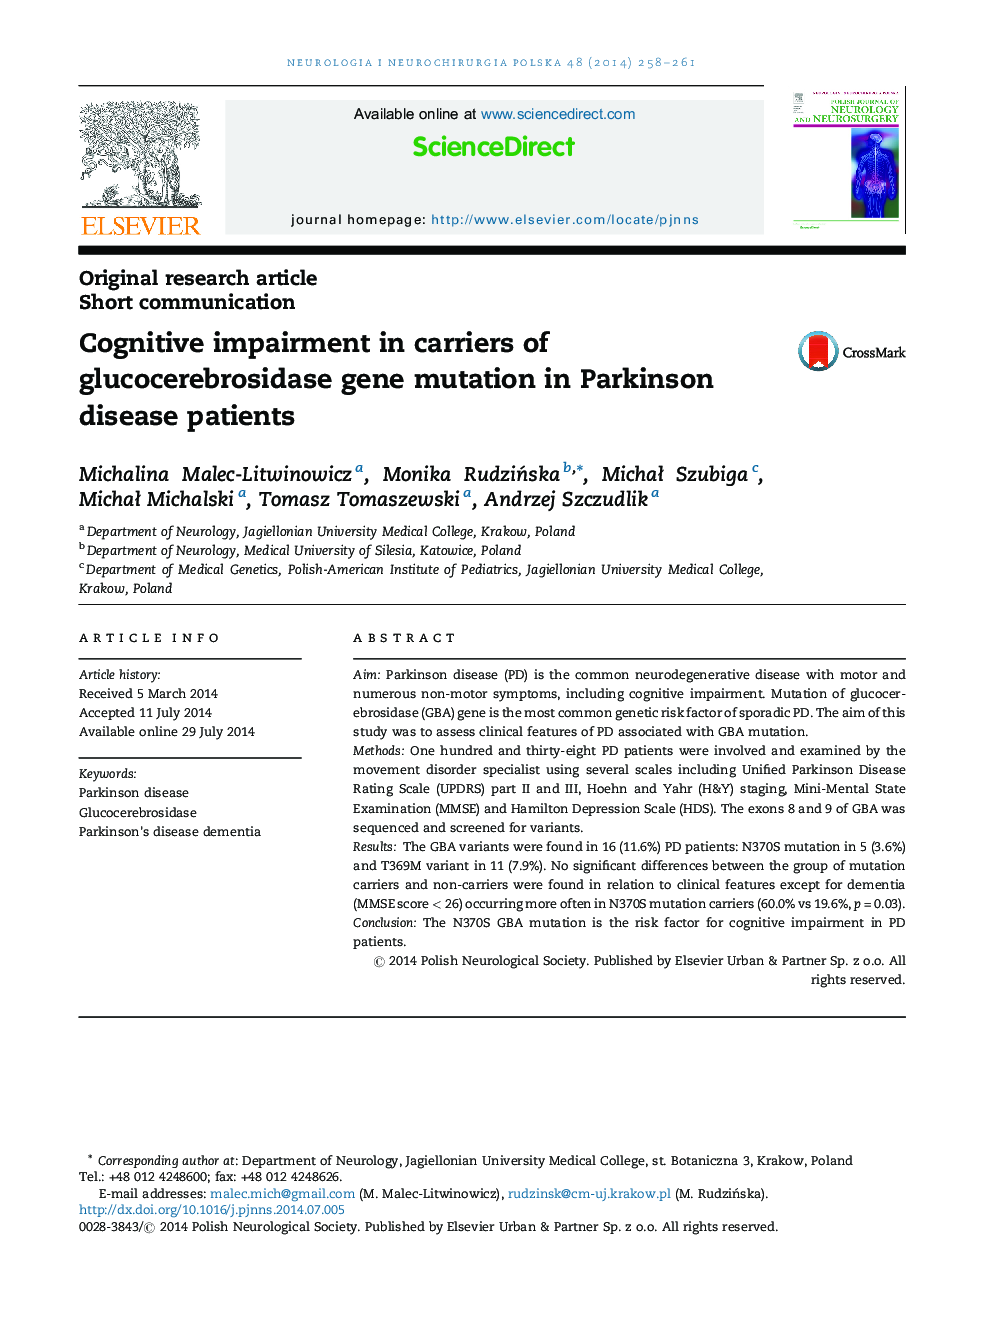 Cognitive impairment in carriers of glucocerebrosidase gene mutation in Parkinson disease patients